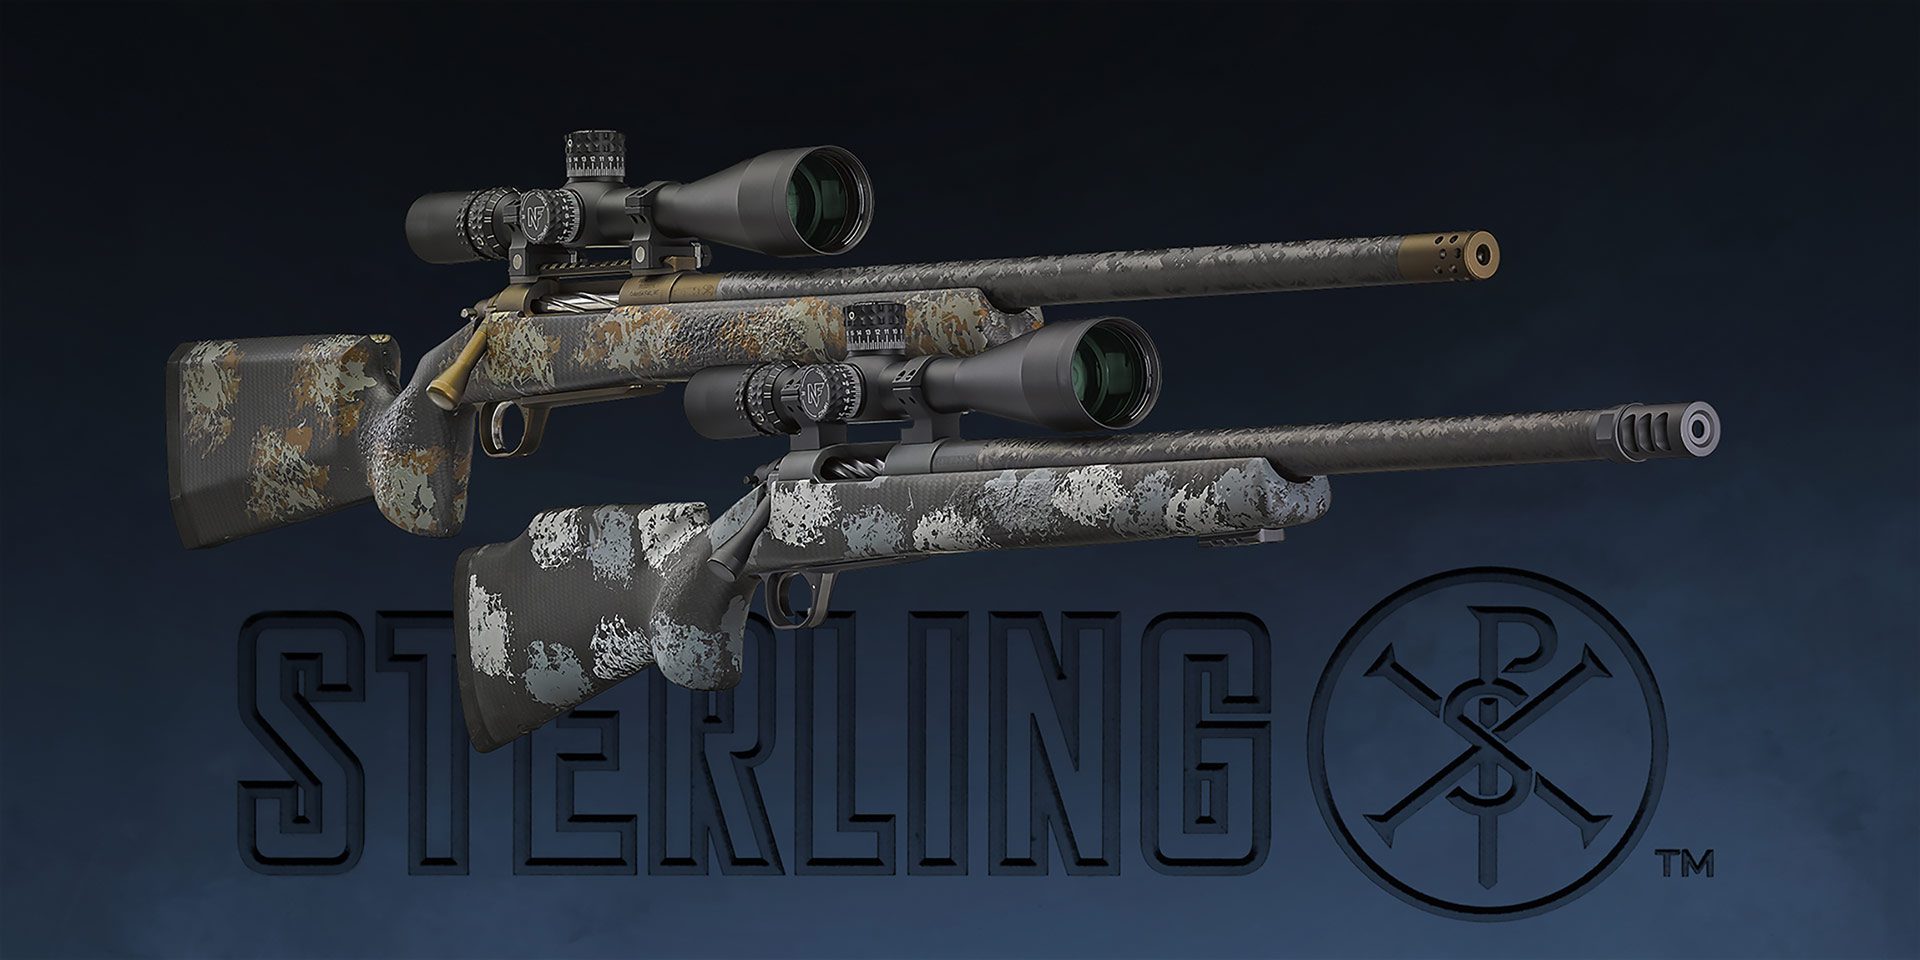 Hunting rifles built by Sterling Precision, LLC